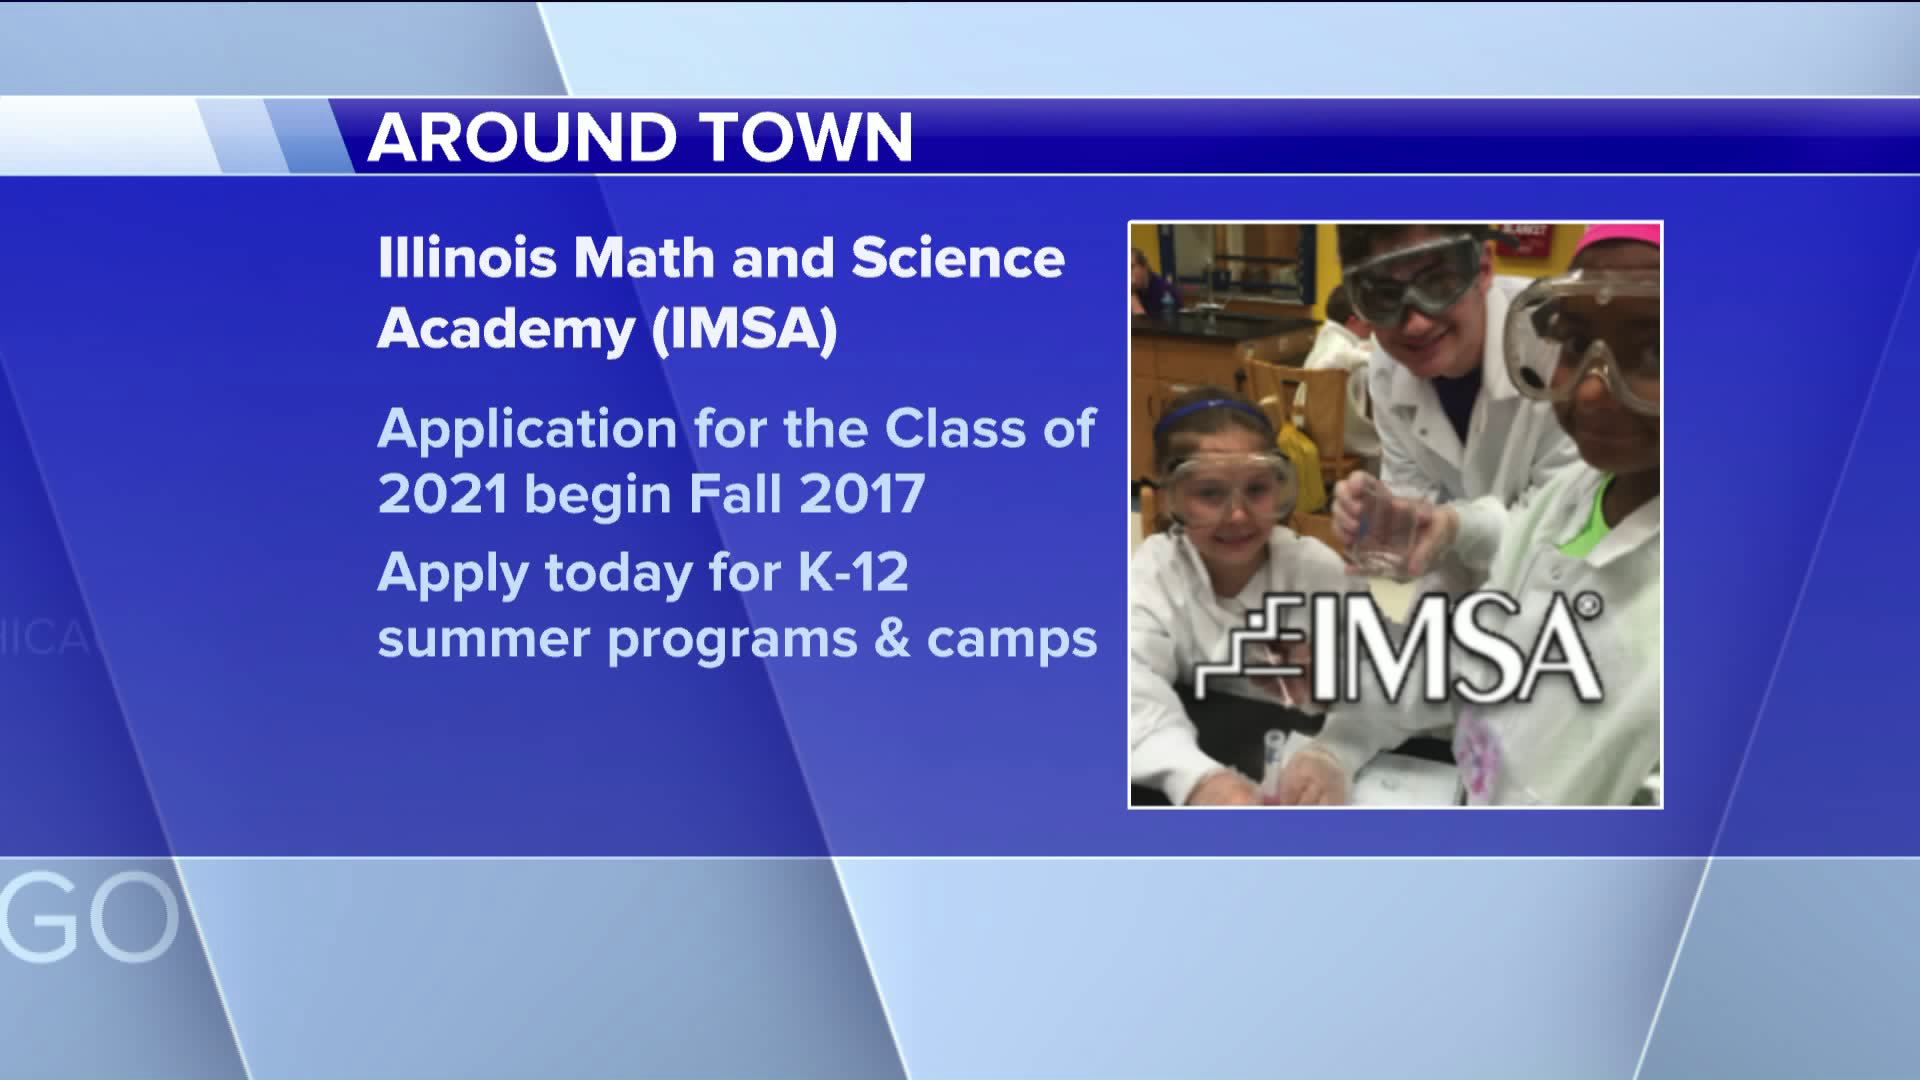 Around Town visits the Illinois Math and Science Academy (IMSA)